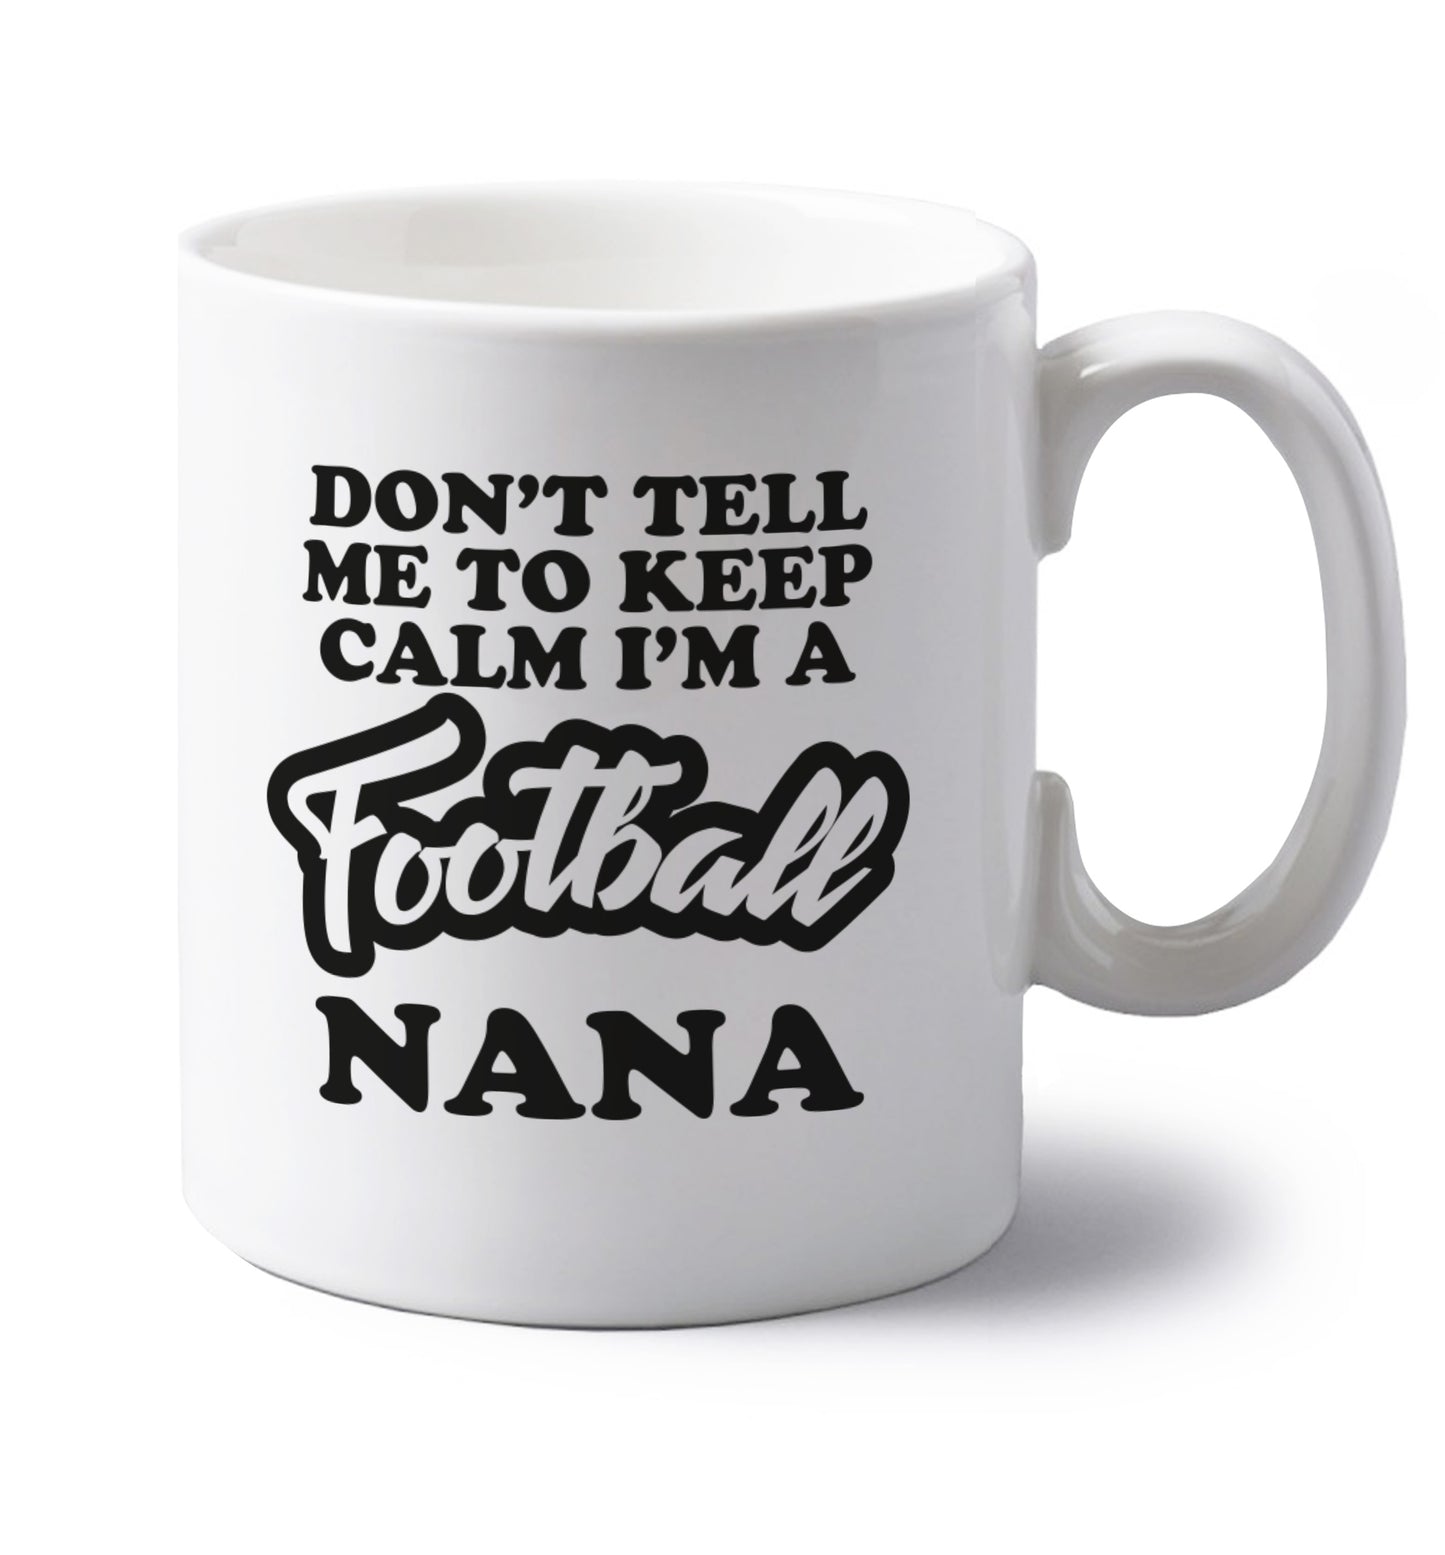 Don't tell me to keep calm I'm a football nana left handed white ceramic mug 